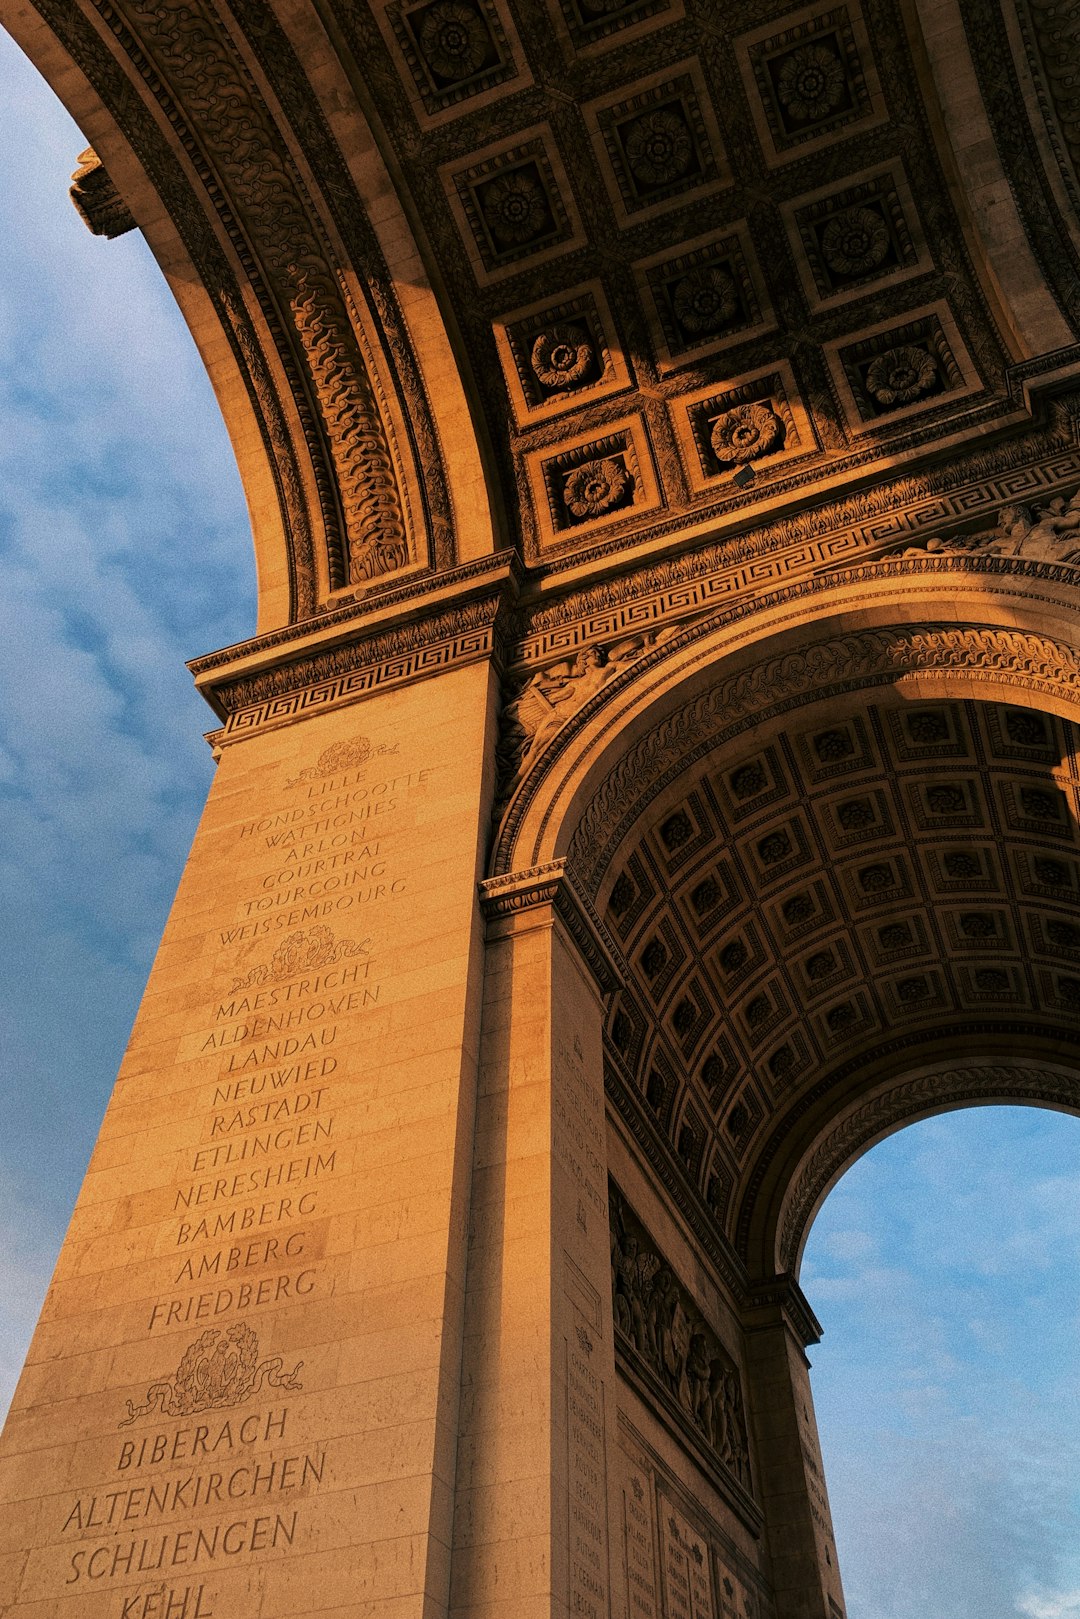 Landmark photo spot Charles de Gaulle – Étoile Champ de Mars